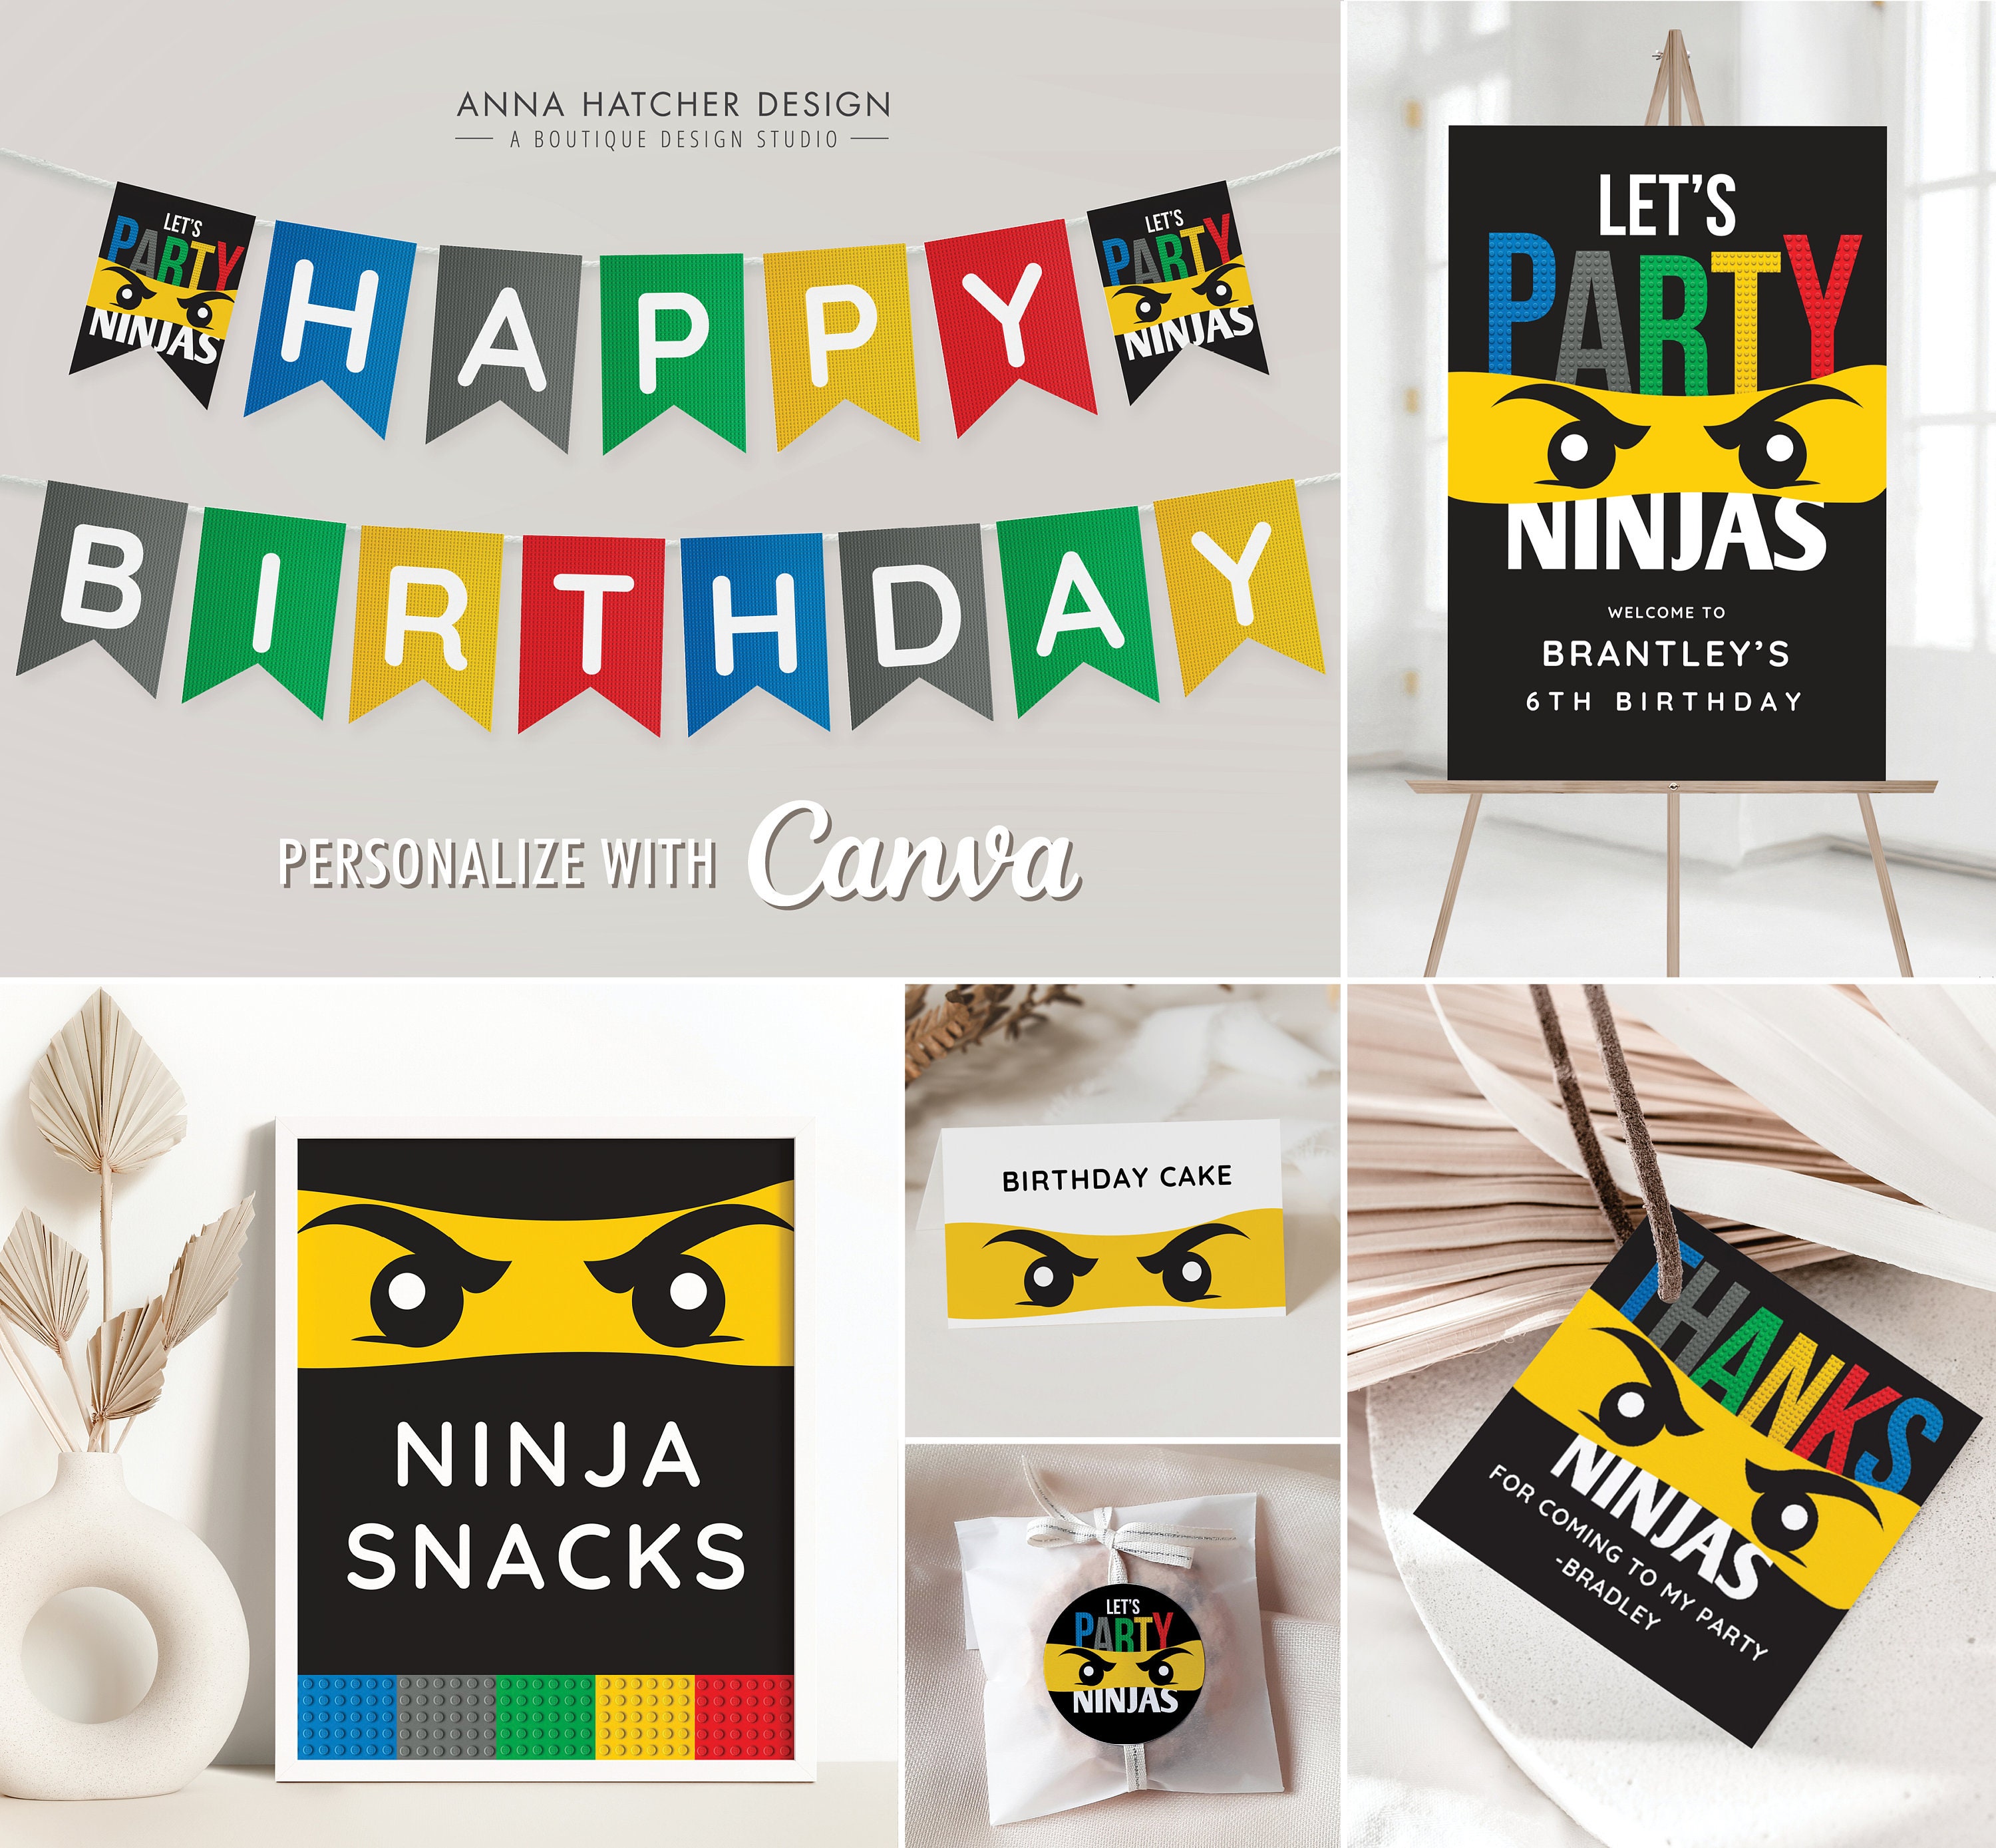 Ninja Coffee Bar Parts & Accessories - Buy Direct From Ninja UK